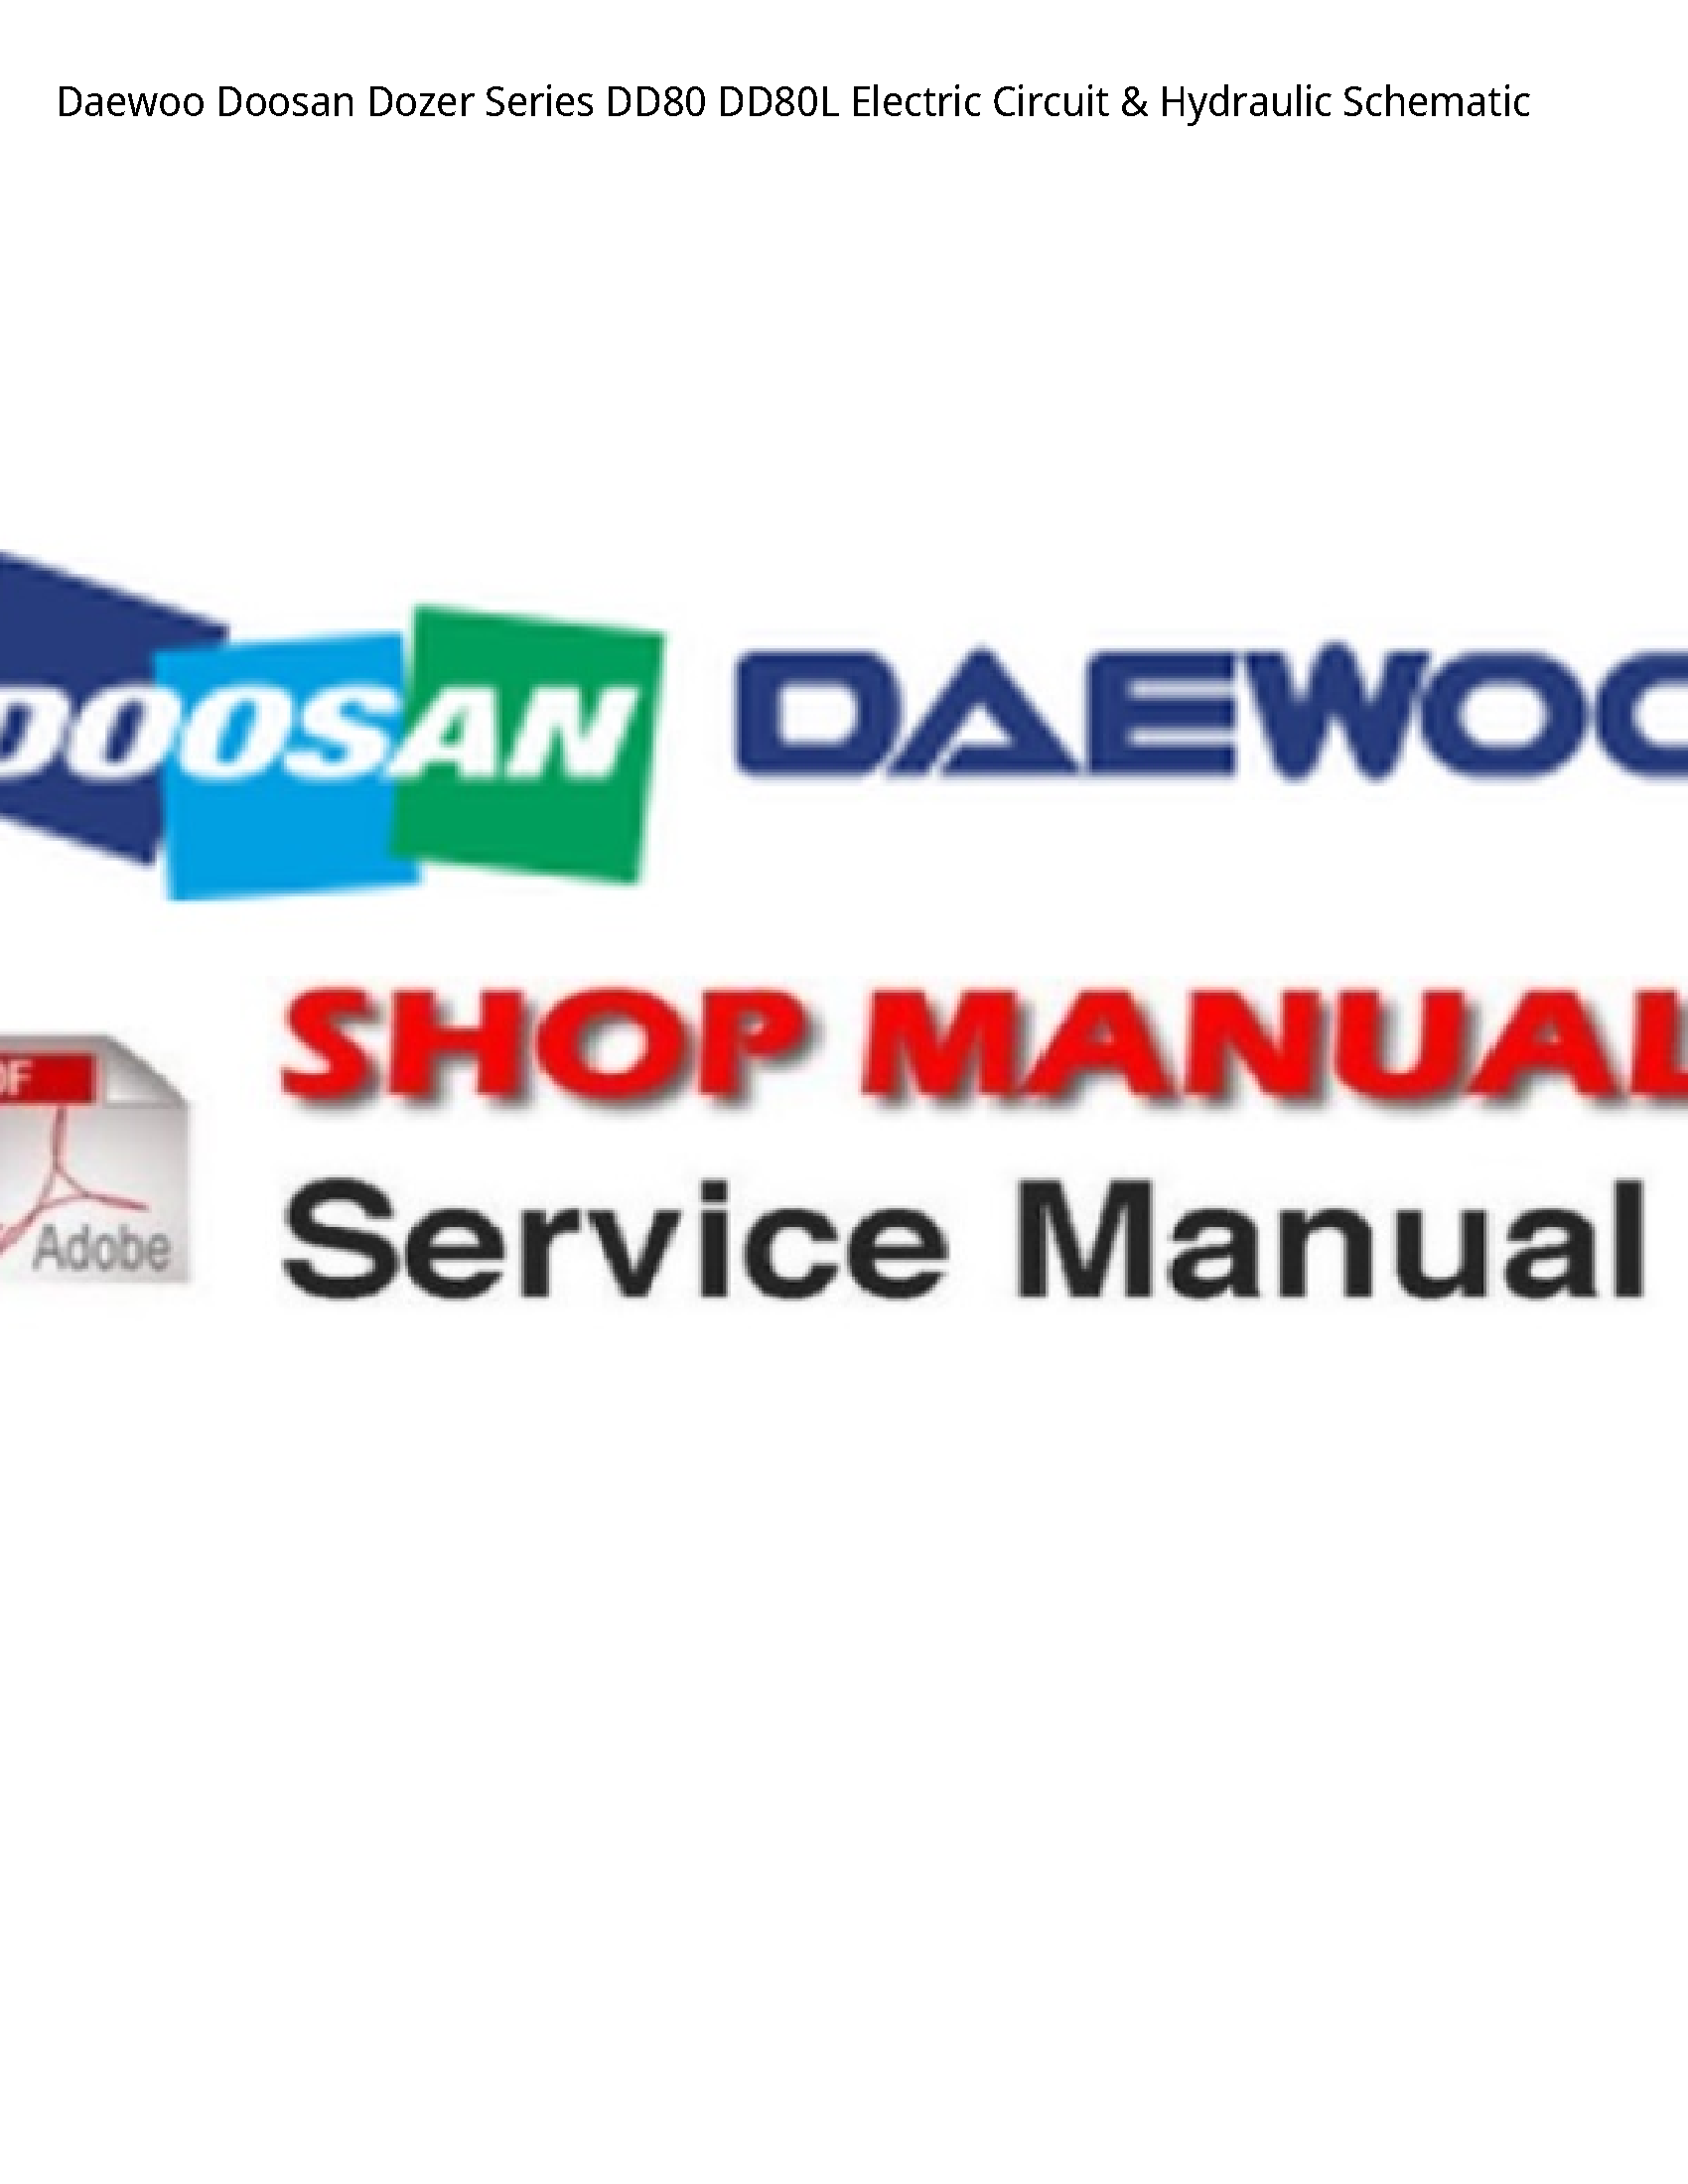 Daewoo Doosan DD80 Dozer Series Electric Circuit Hydraulic Schematic manual